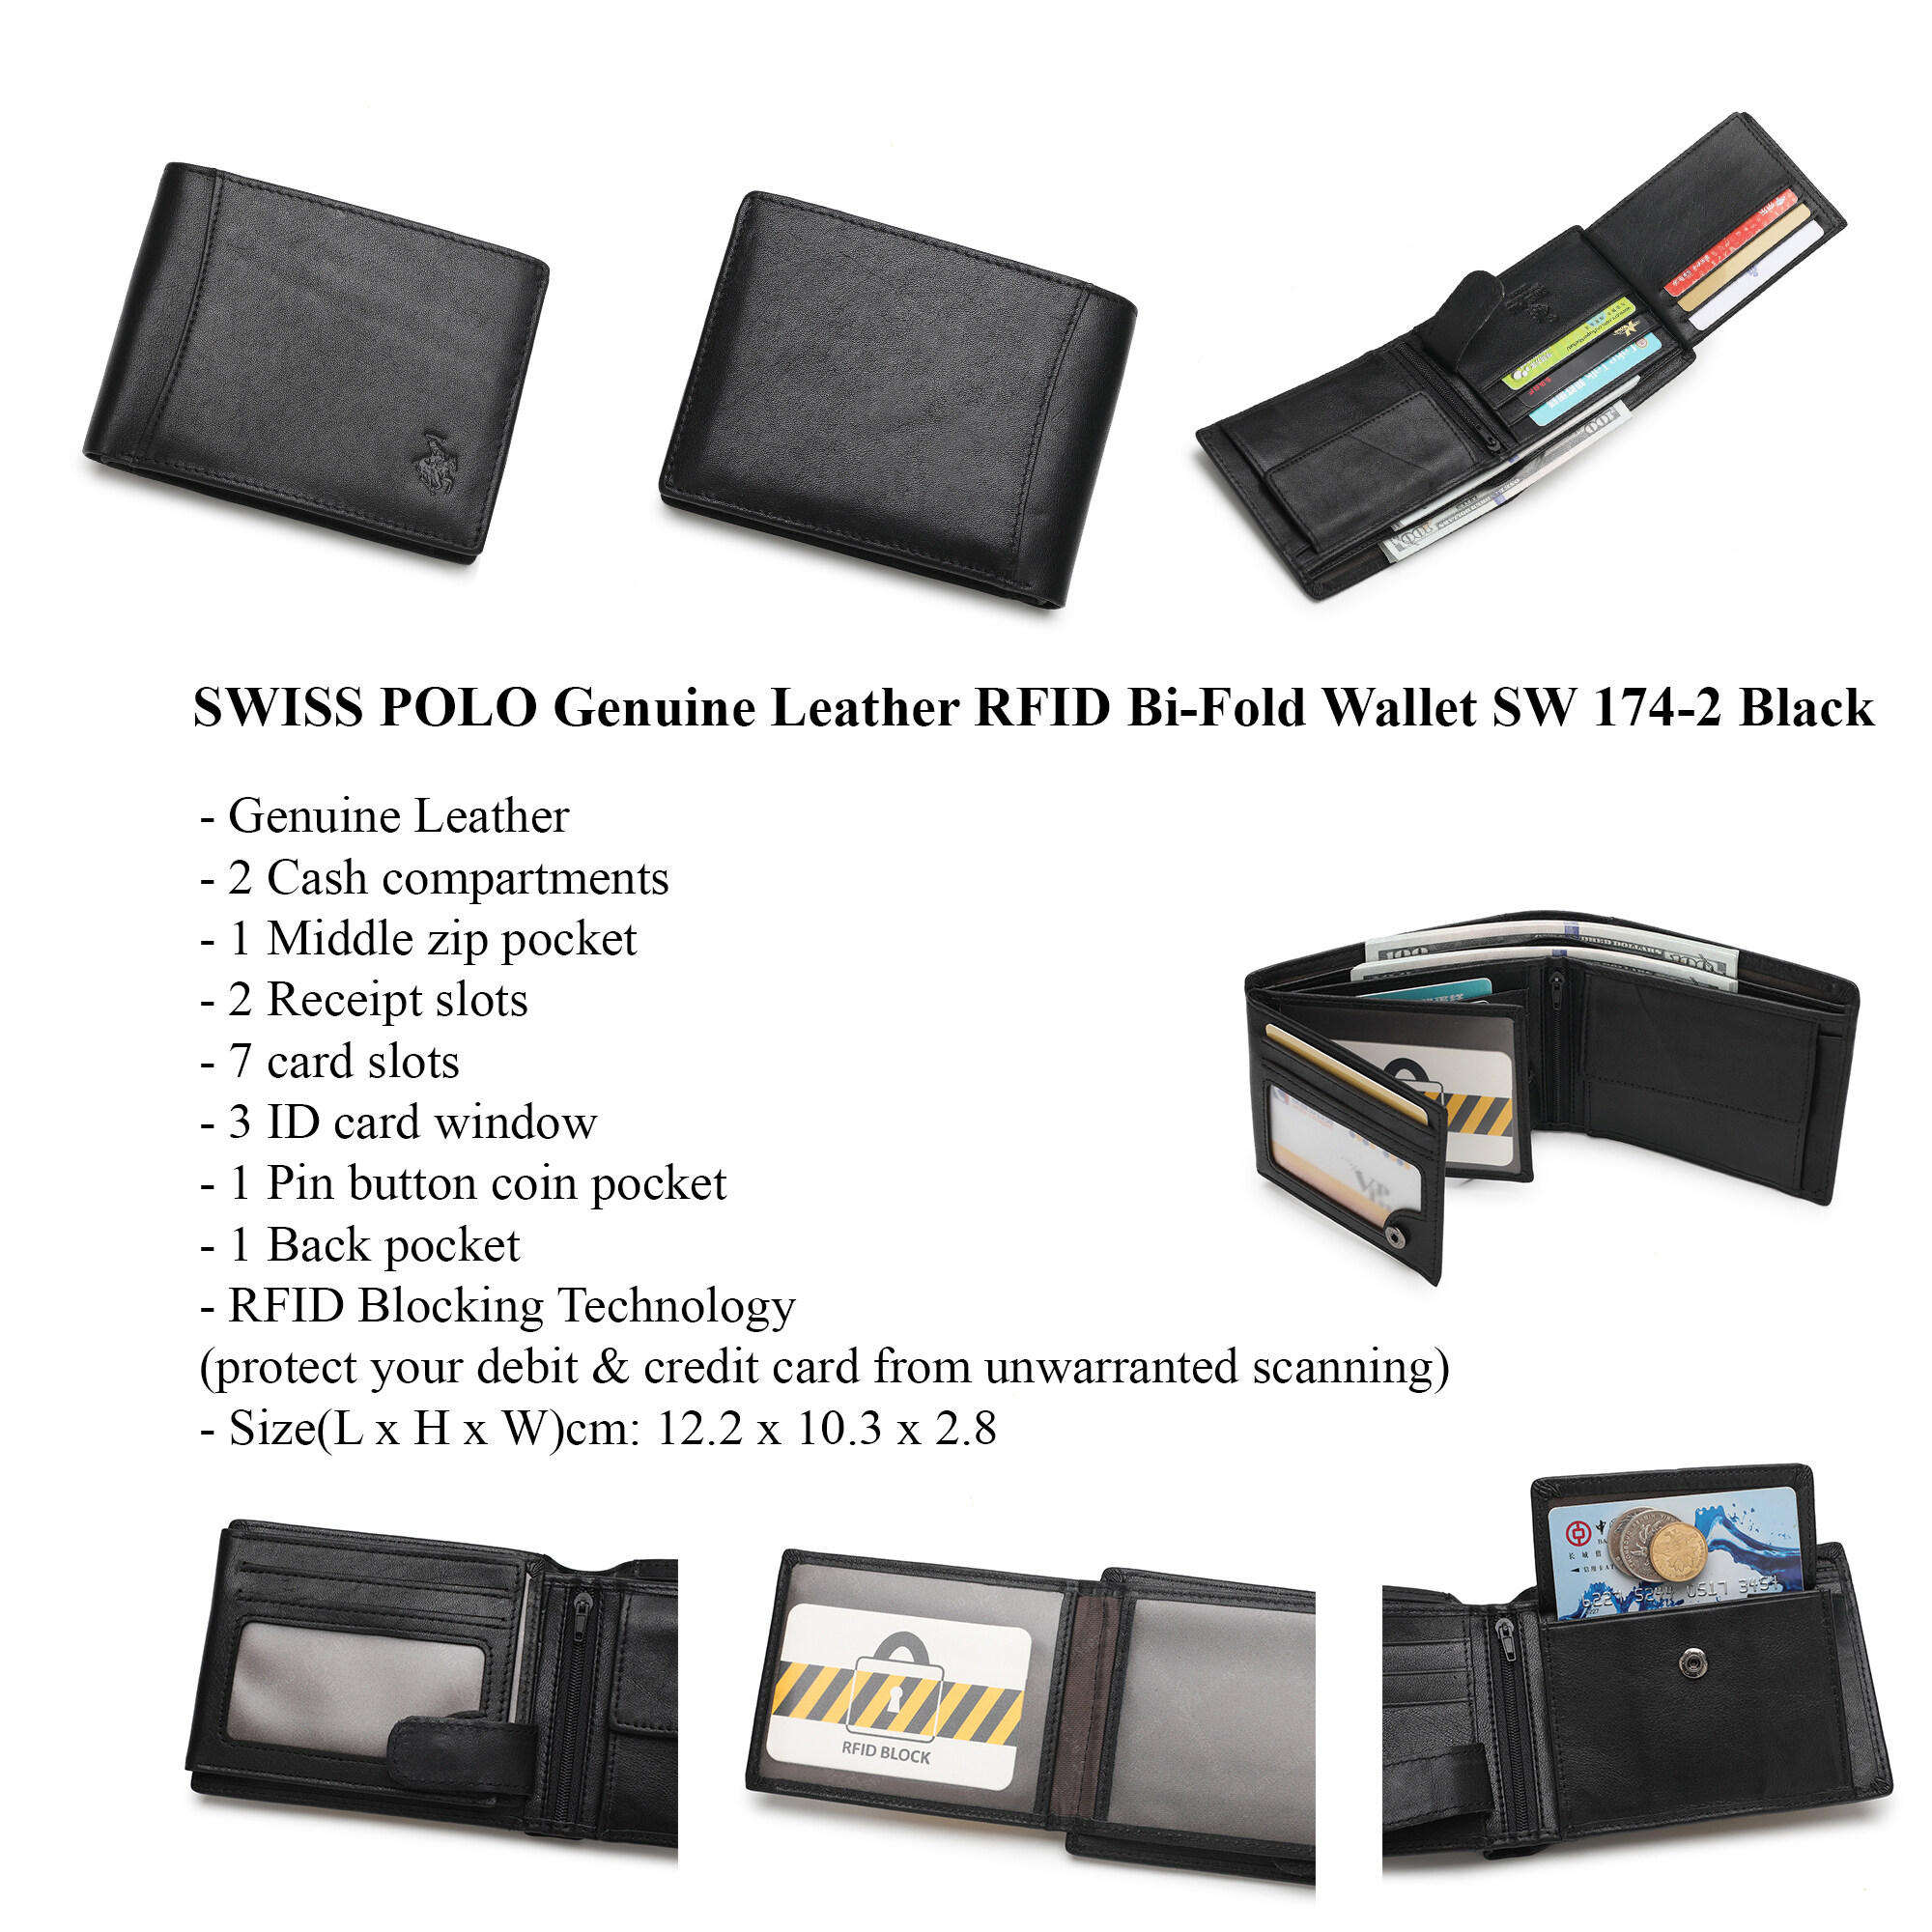 SWISS POLO Genuine Leather RFID Short Wallet SW 174-2 BLACK